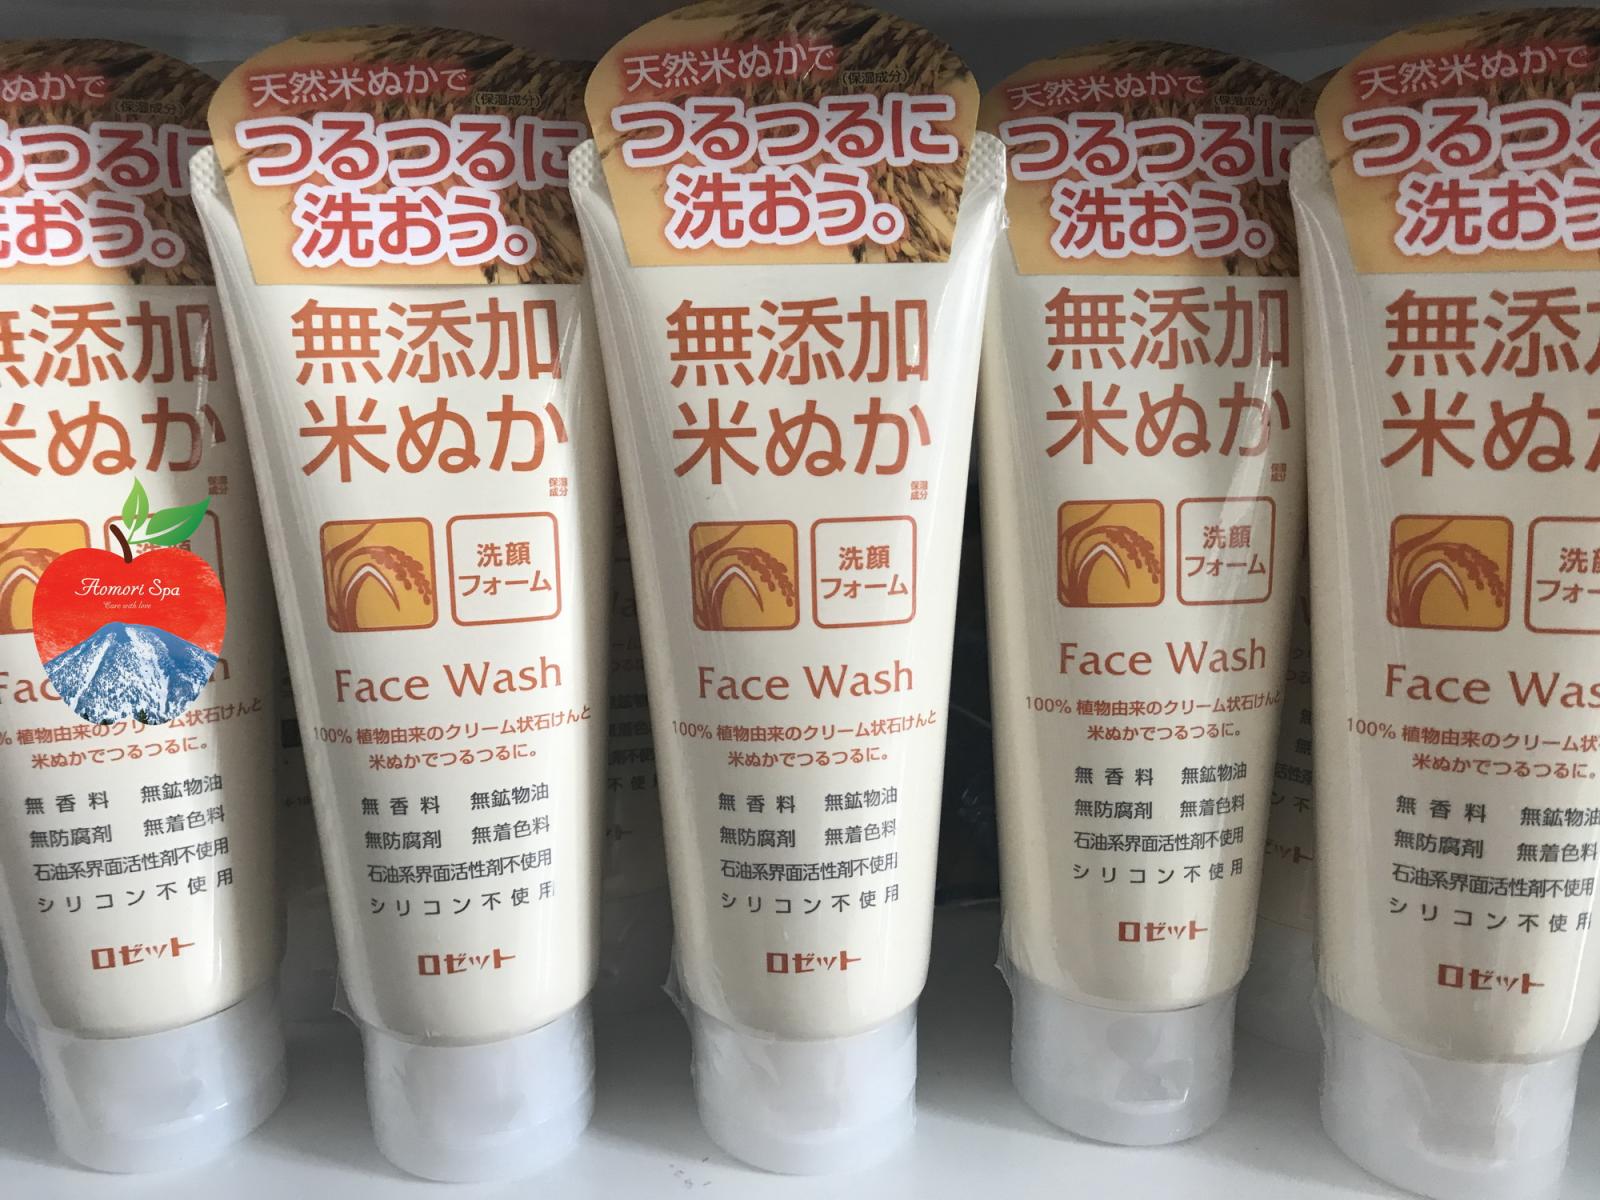 Sữa rửa mặt cám gạo Rosette Nhật Bản